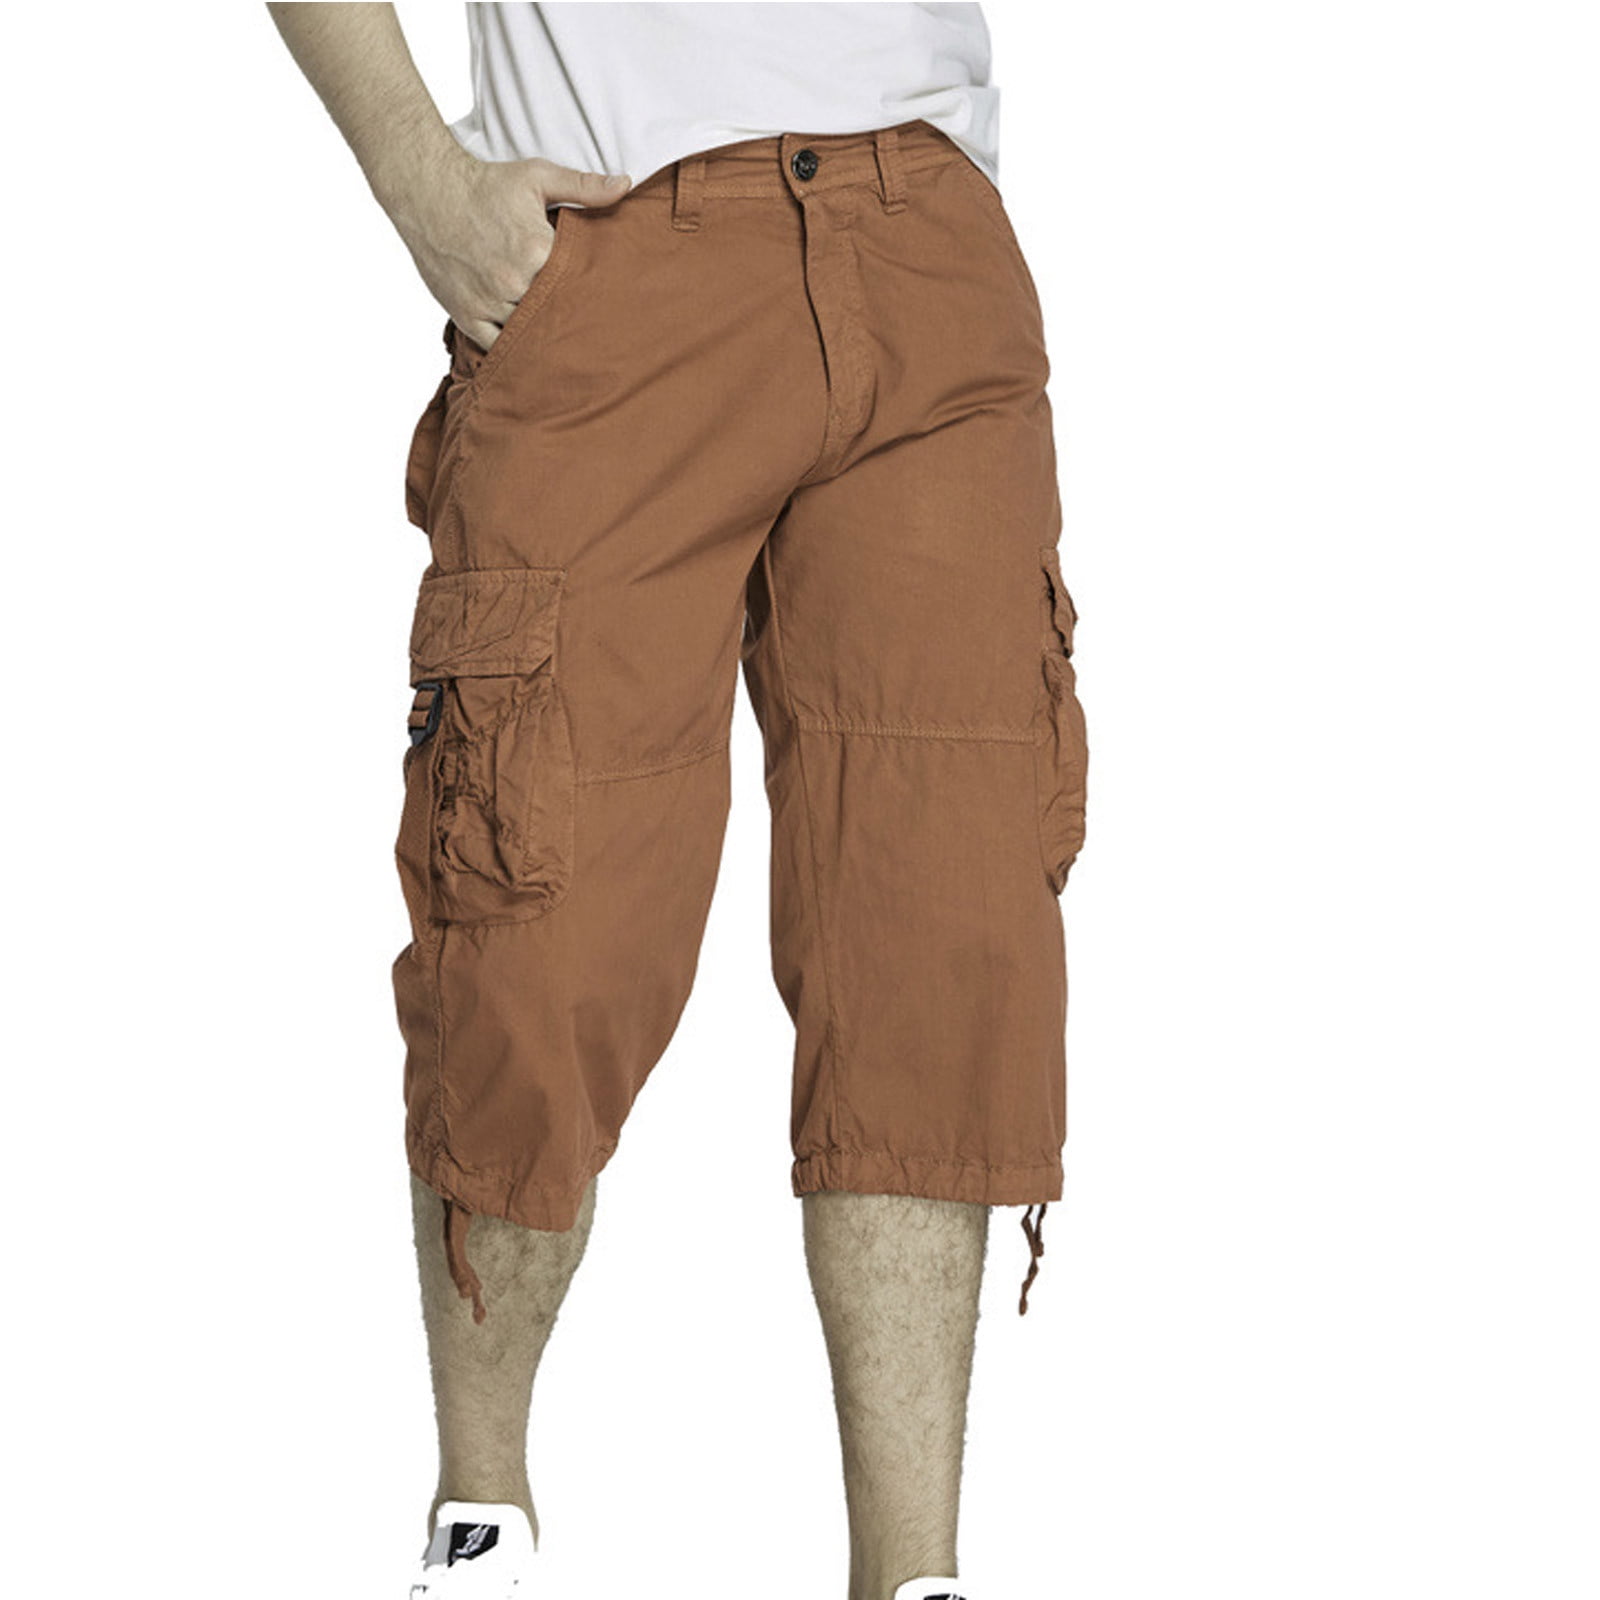 jsaierl Mens Cargo Shorts Plus Size Multi Pockets Shorts Work Combat ...